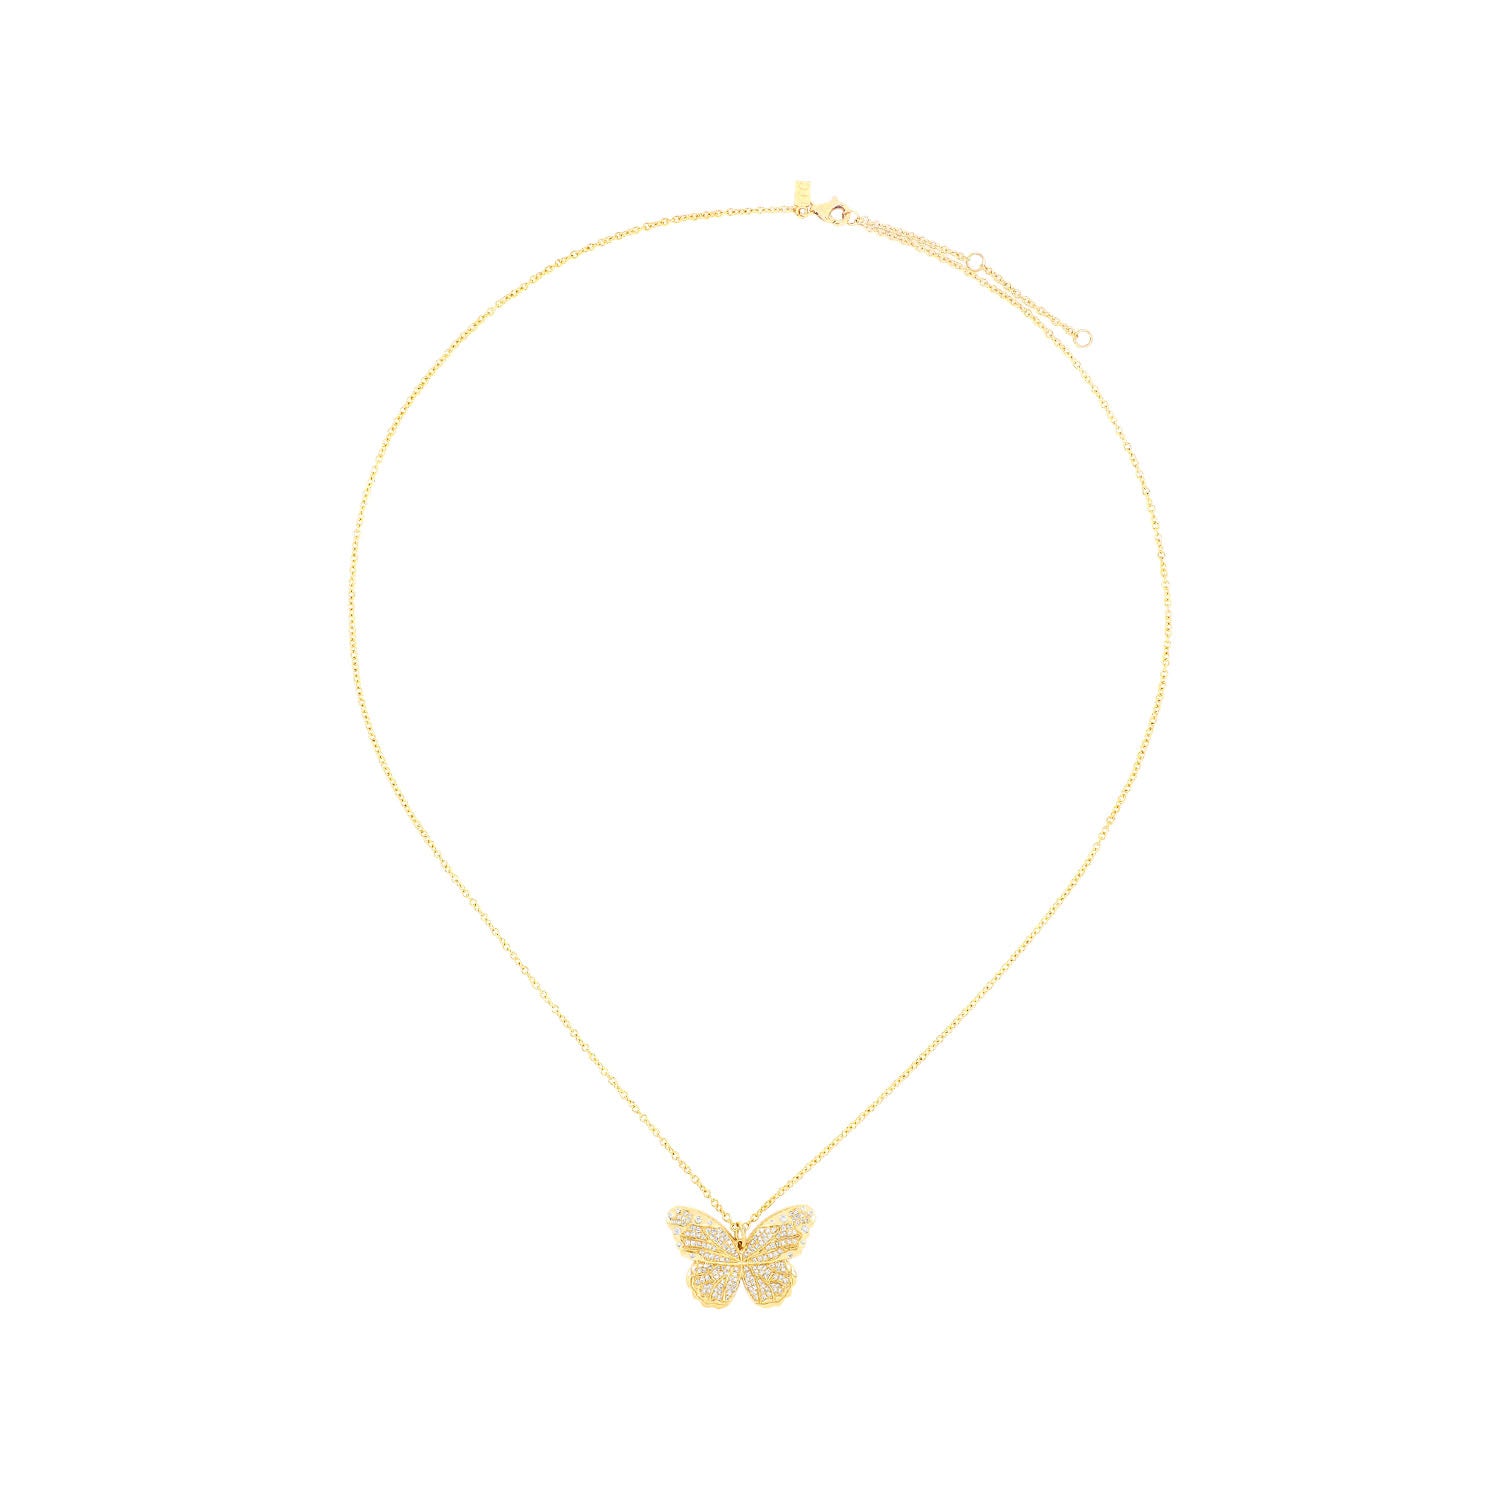 Pavé Diamond Jumbo Butterfly Necklace in 14k yellow gold